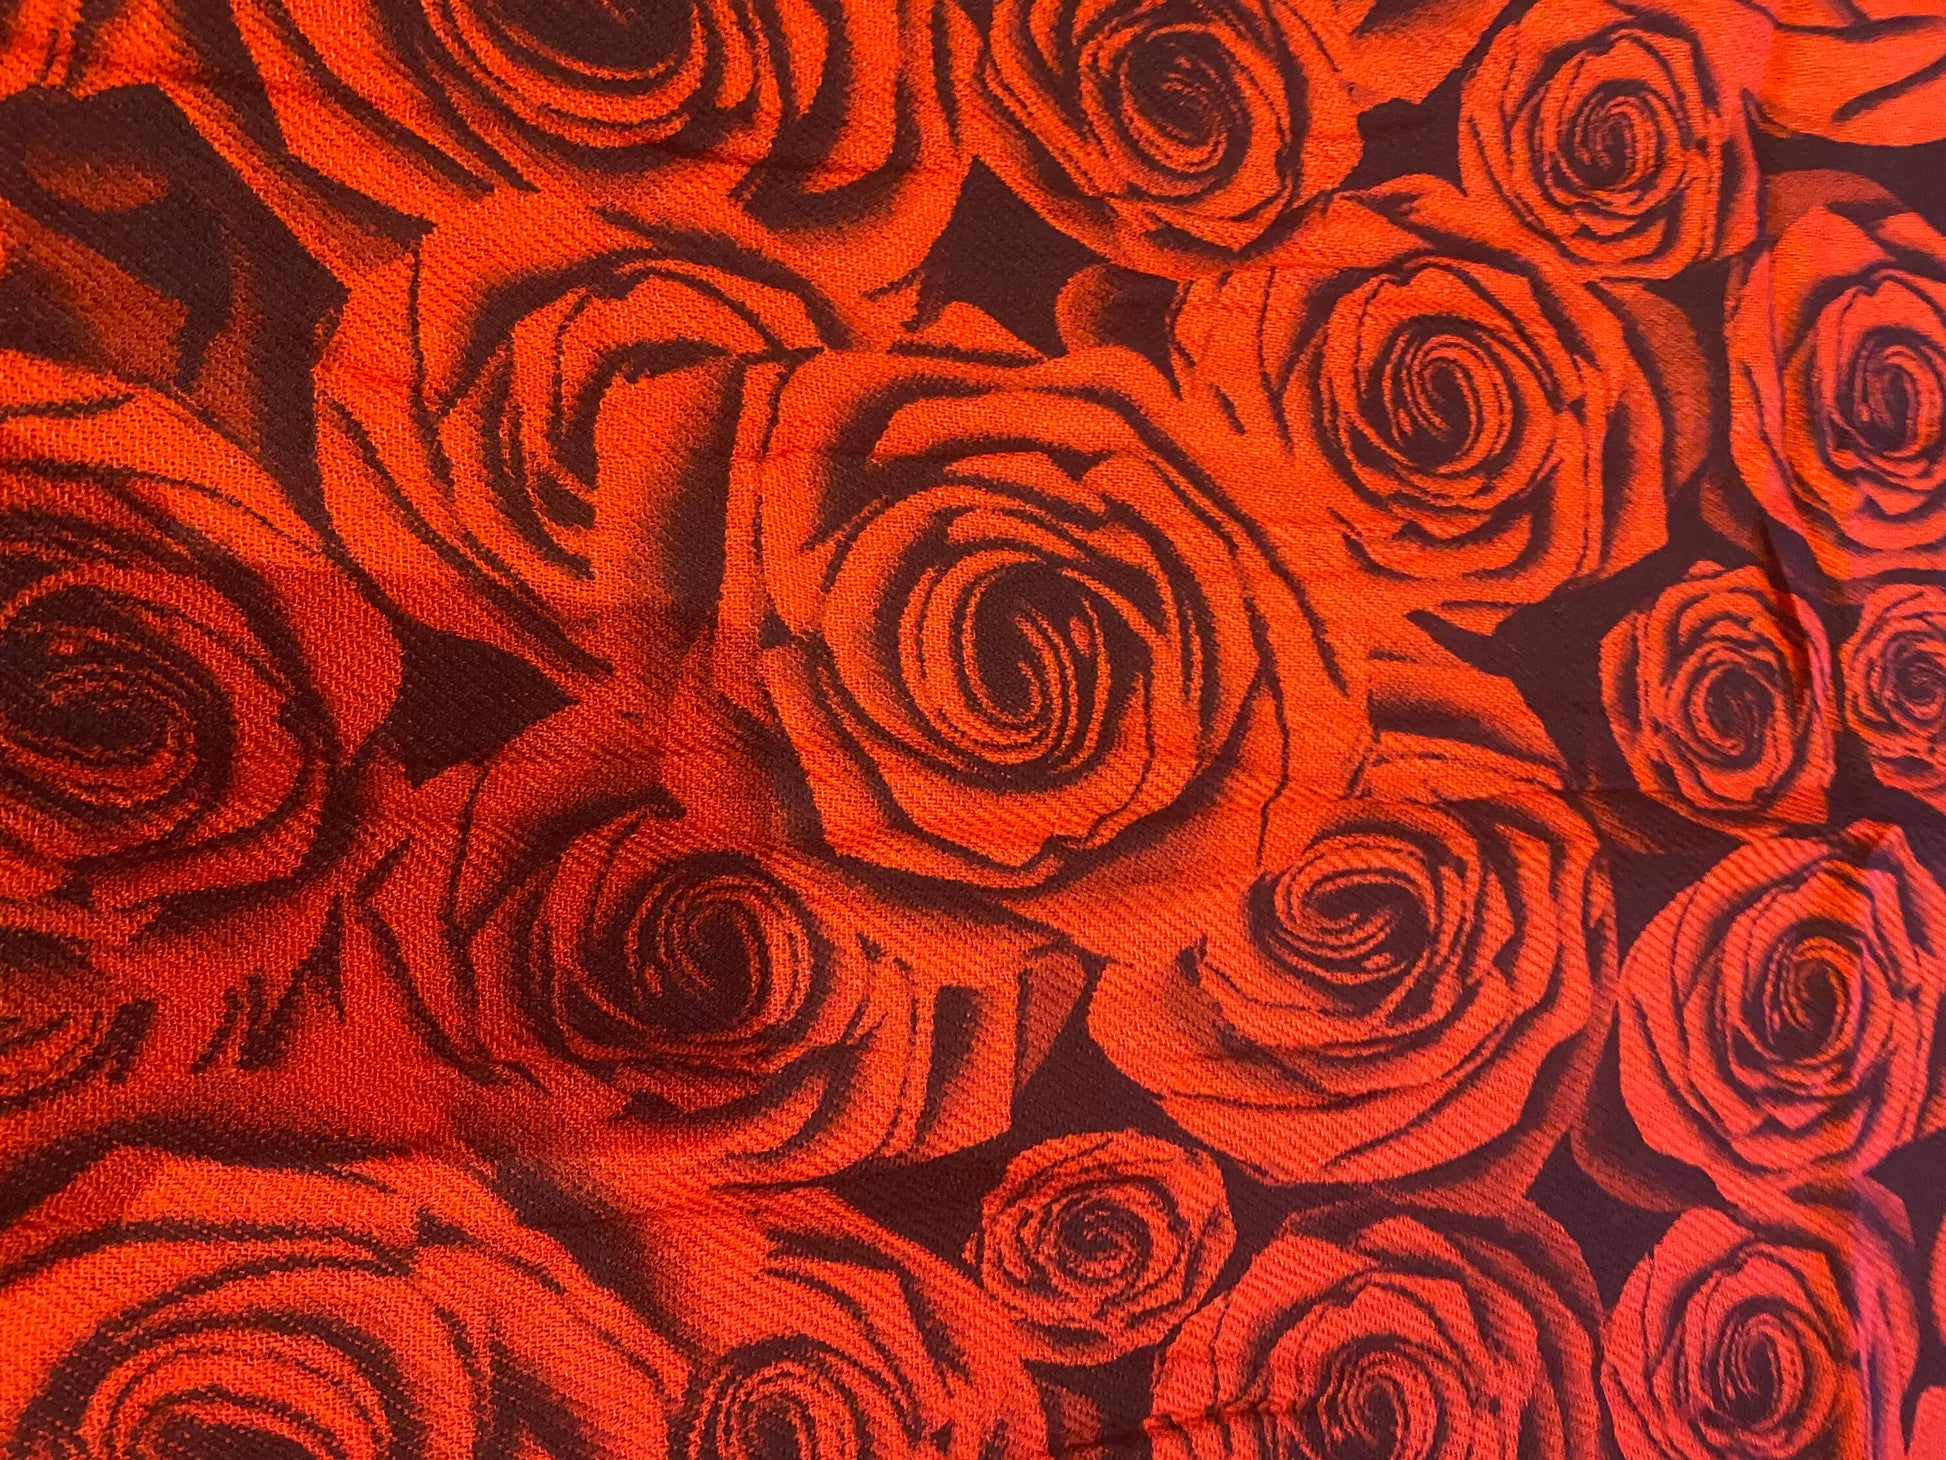 Vintage Valentine Red Black Rose Pashmina Wrap Shawl Scarf